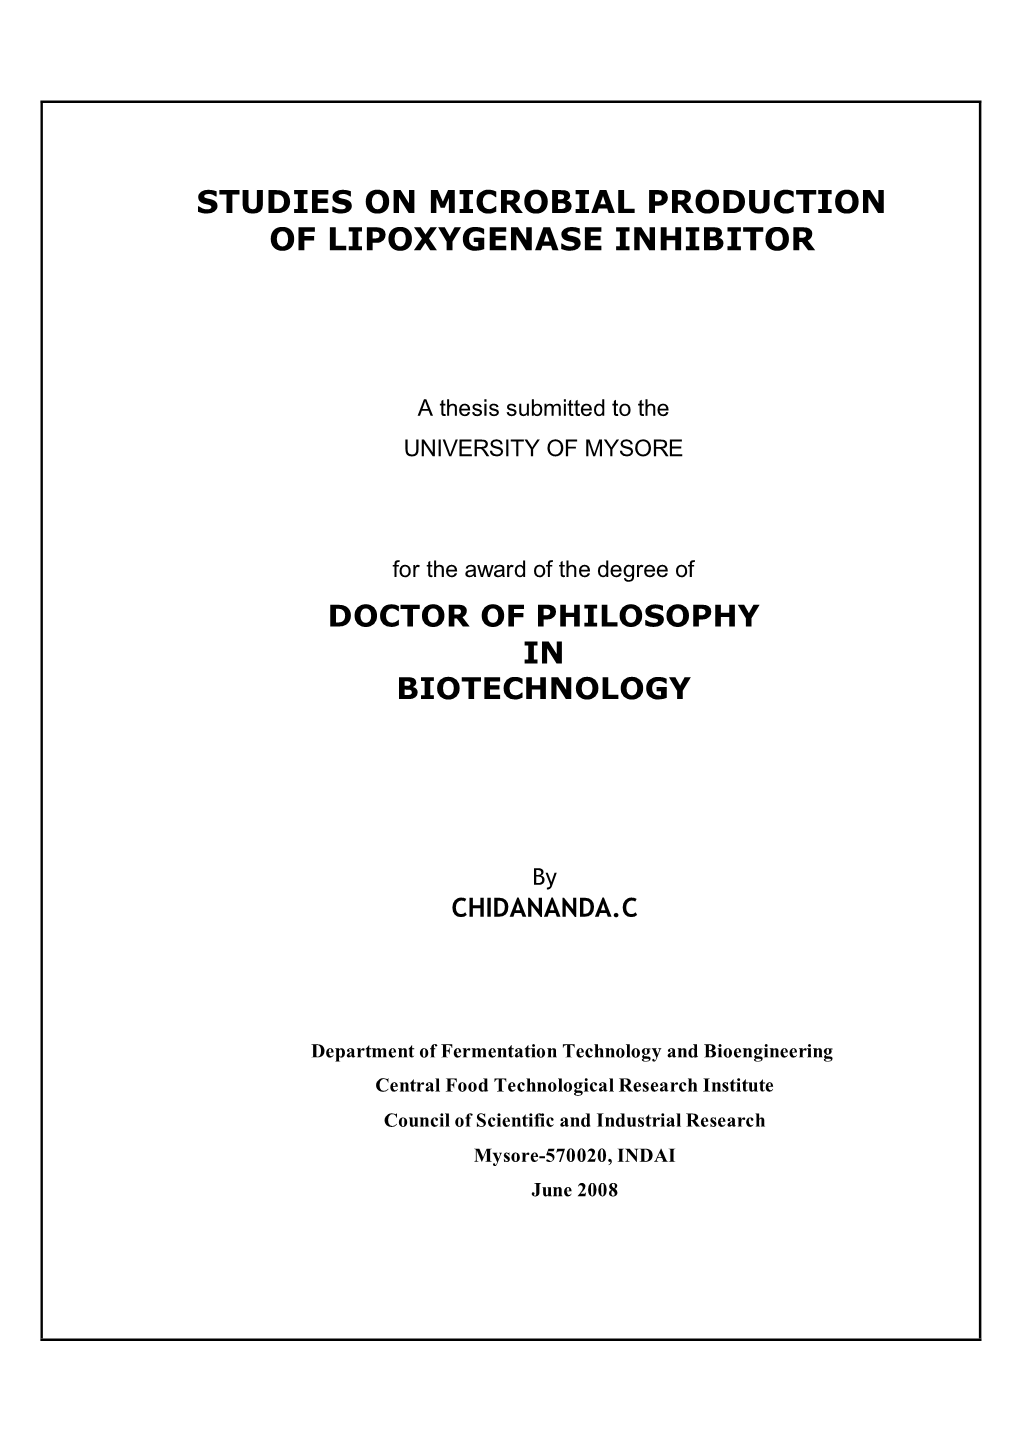 Studies on Microbial Production of Lipoxygenase Inhibitor